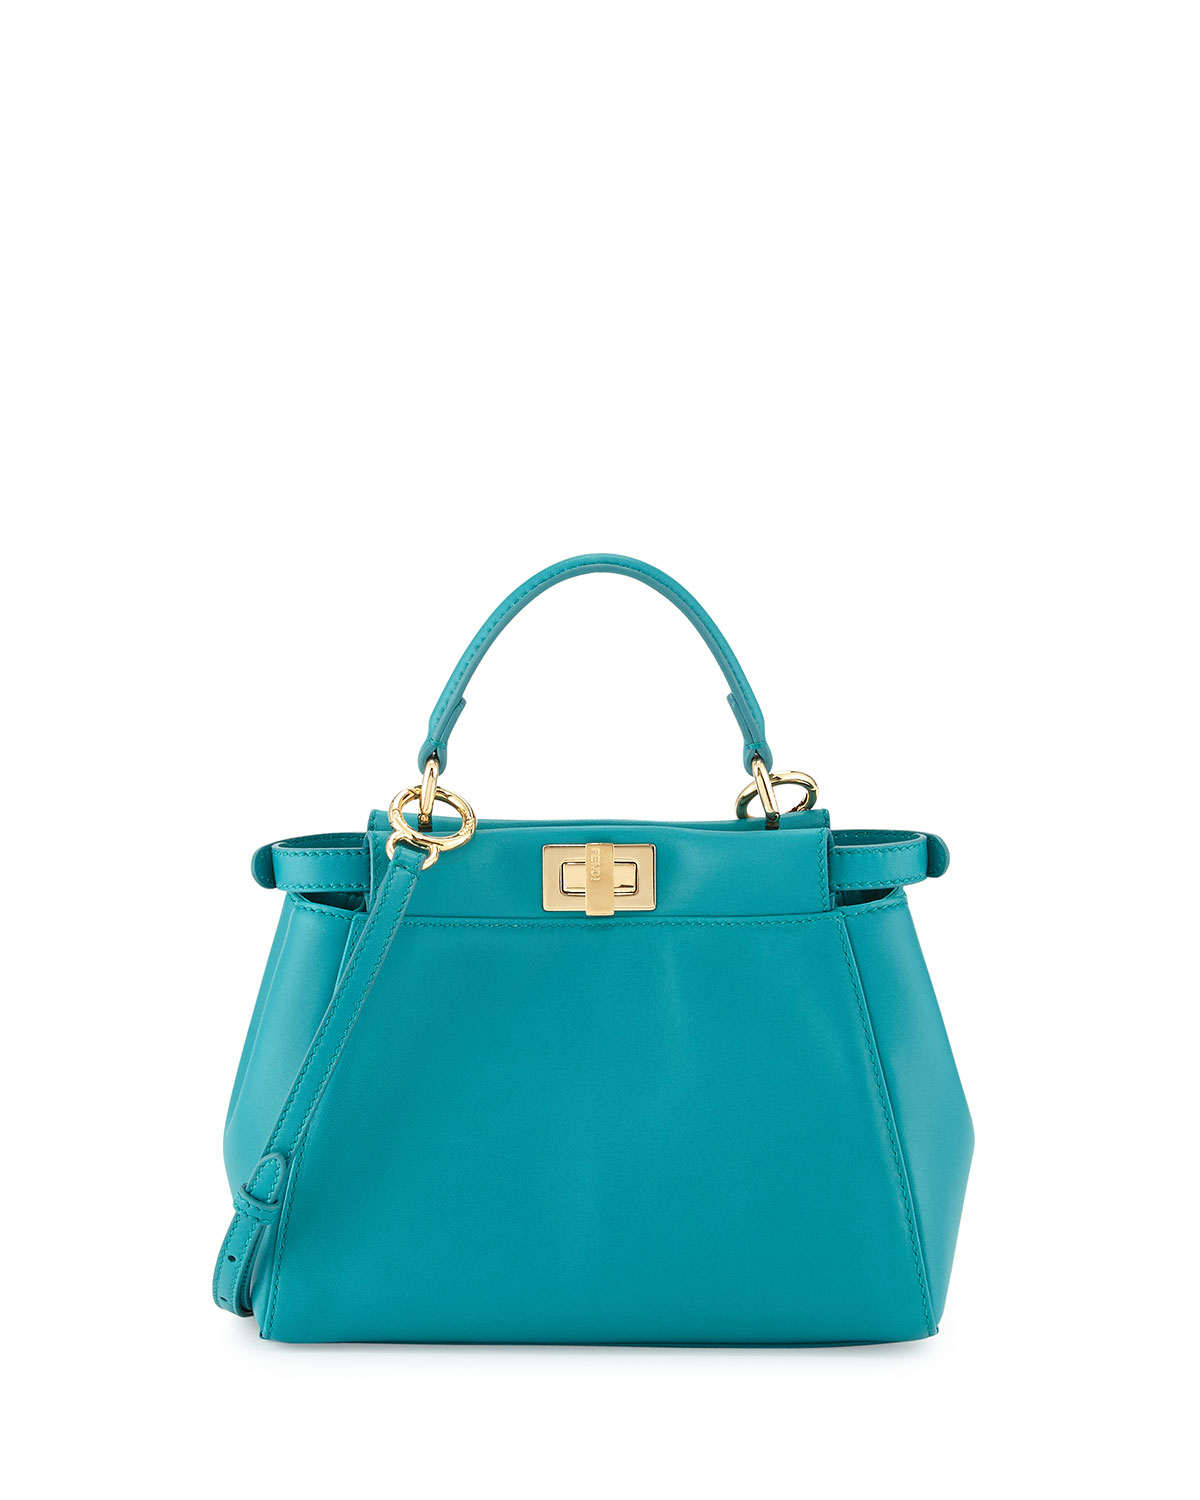 Lyst - Fendi Peekaboo Mini Leather Satchel Bag in Blue